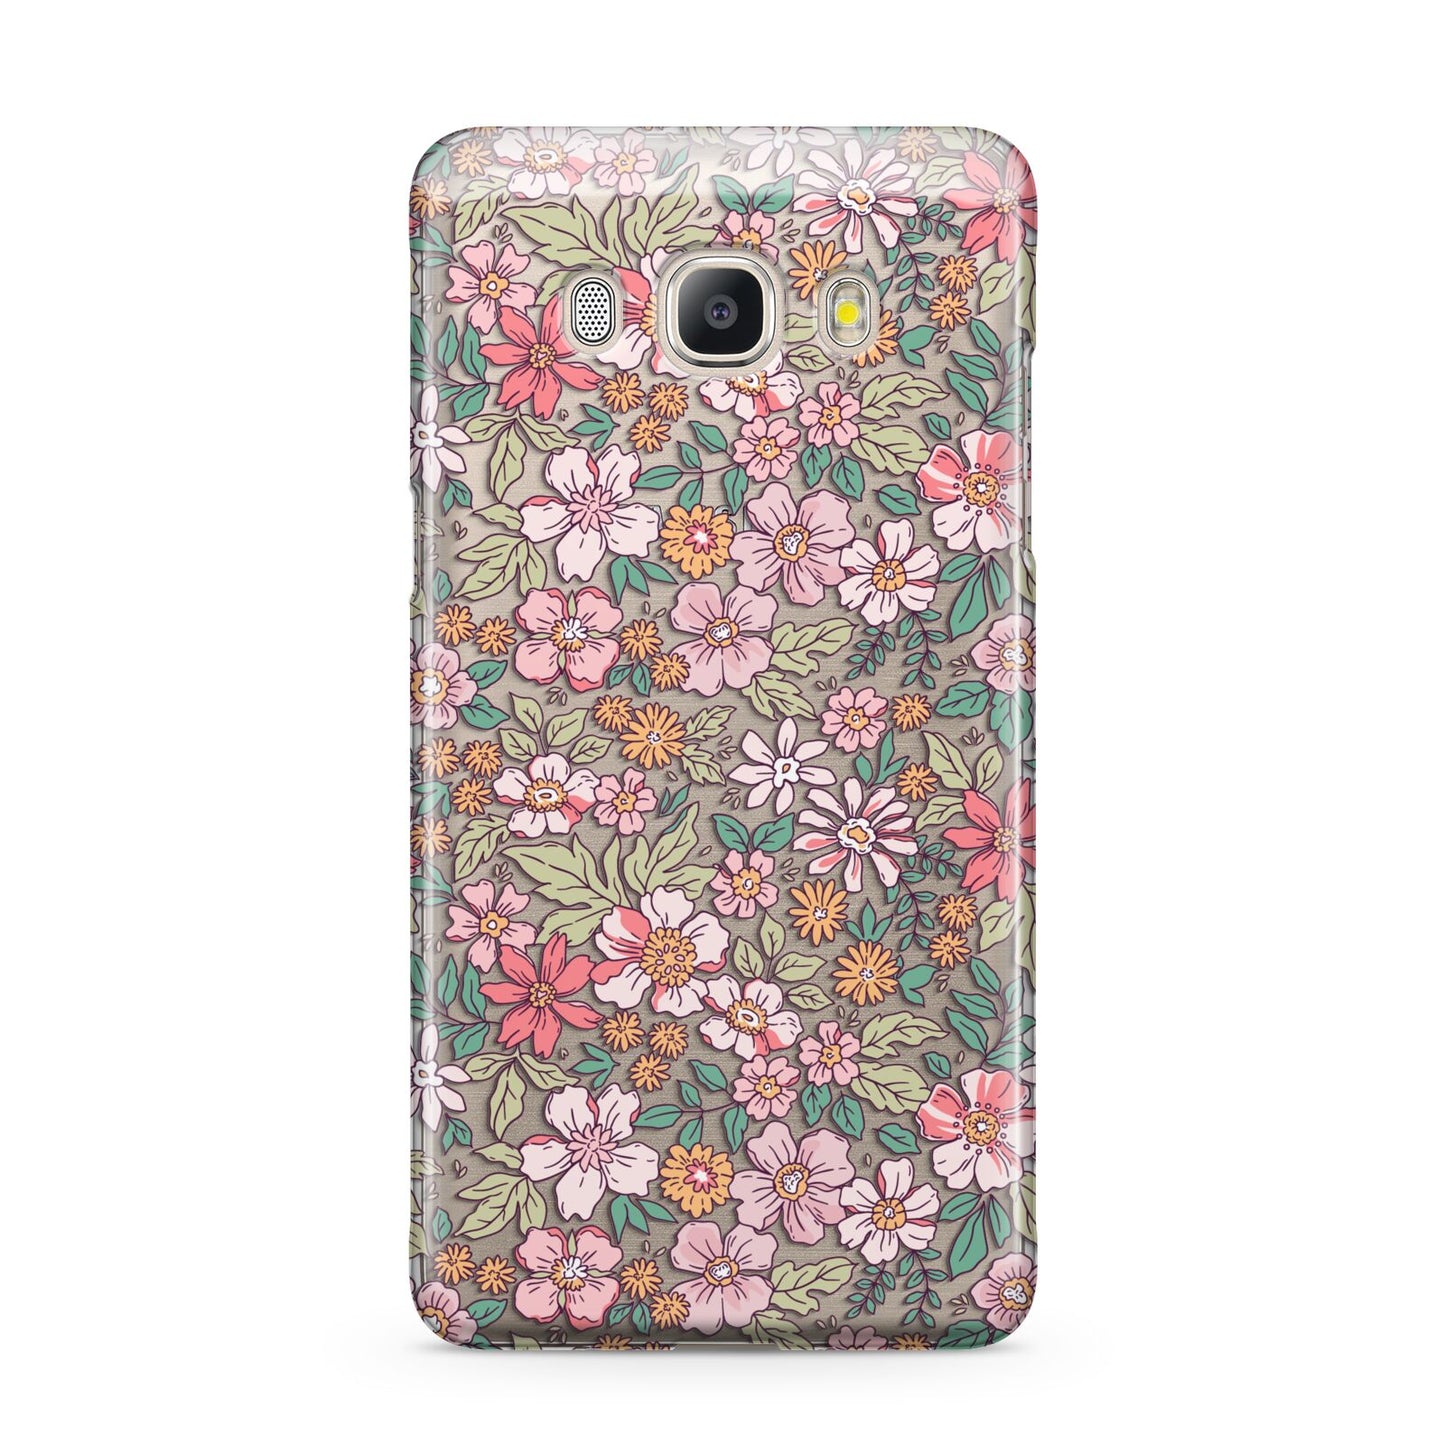 Small Floral Pattern Samsung Galaxy J5 2016 Case